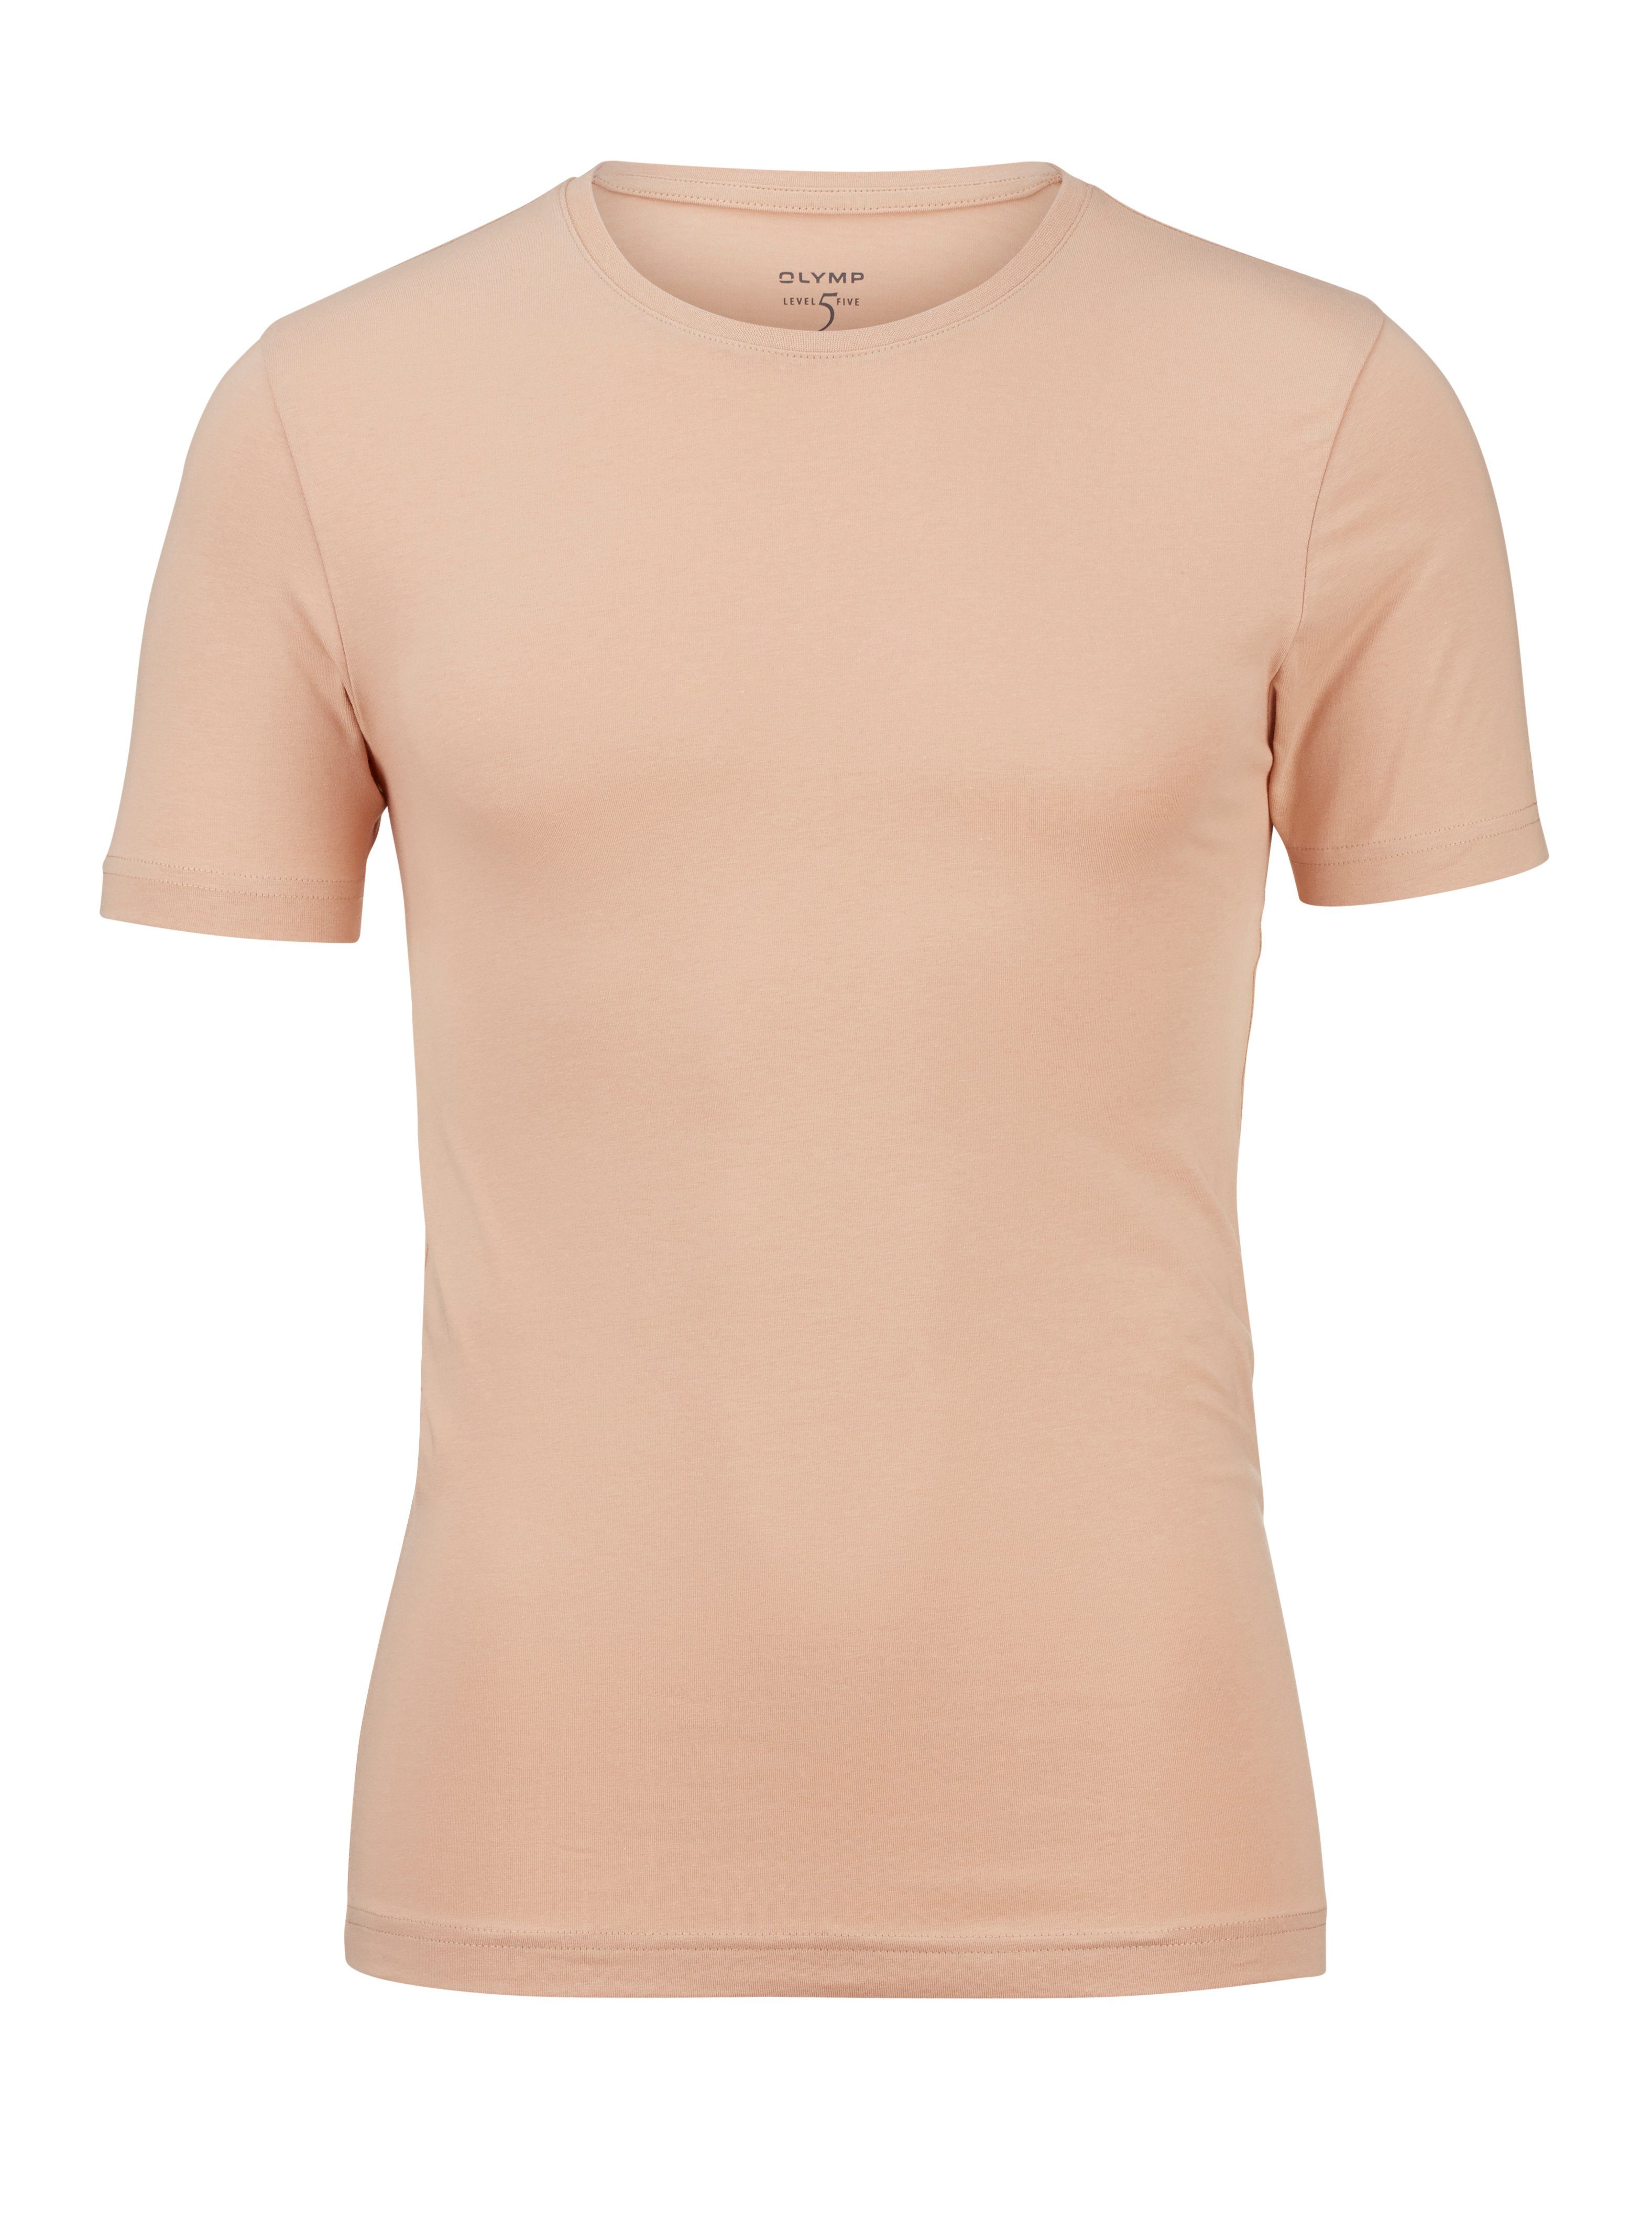 OLYMP fit T-Shirt Level caramel 5 body